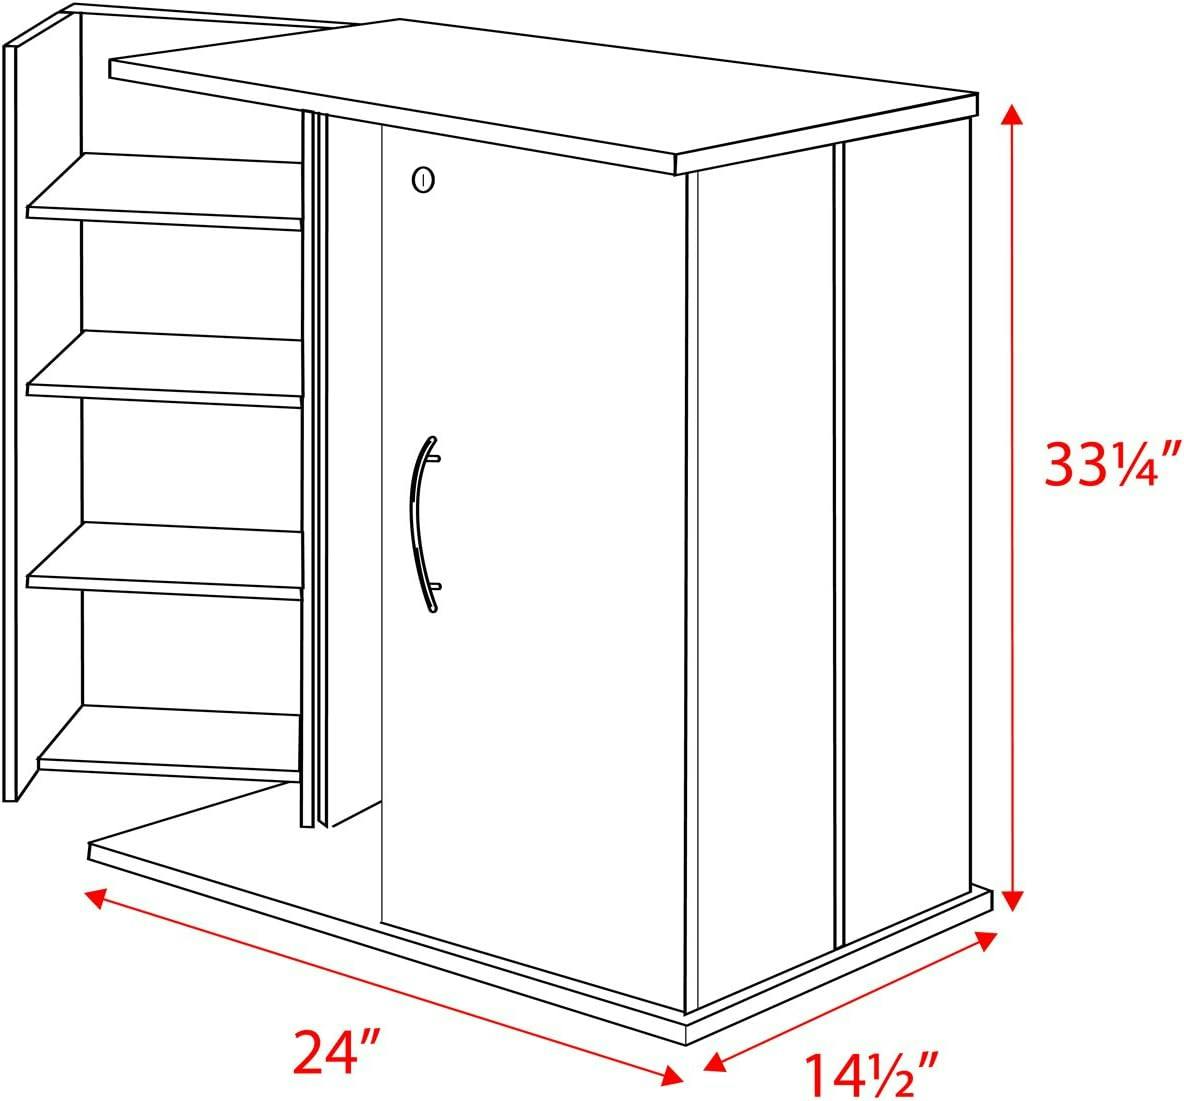 Adjustable Black Locking Media Storage Cabinet with Nickel Handles